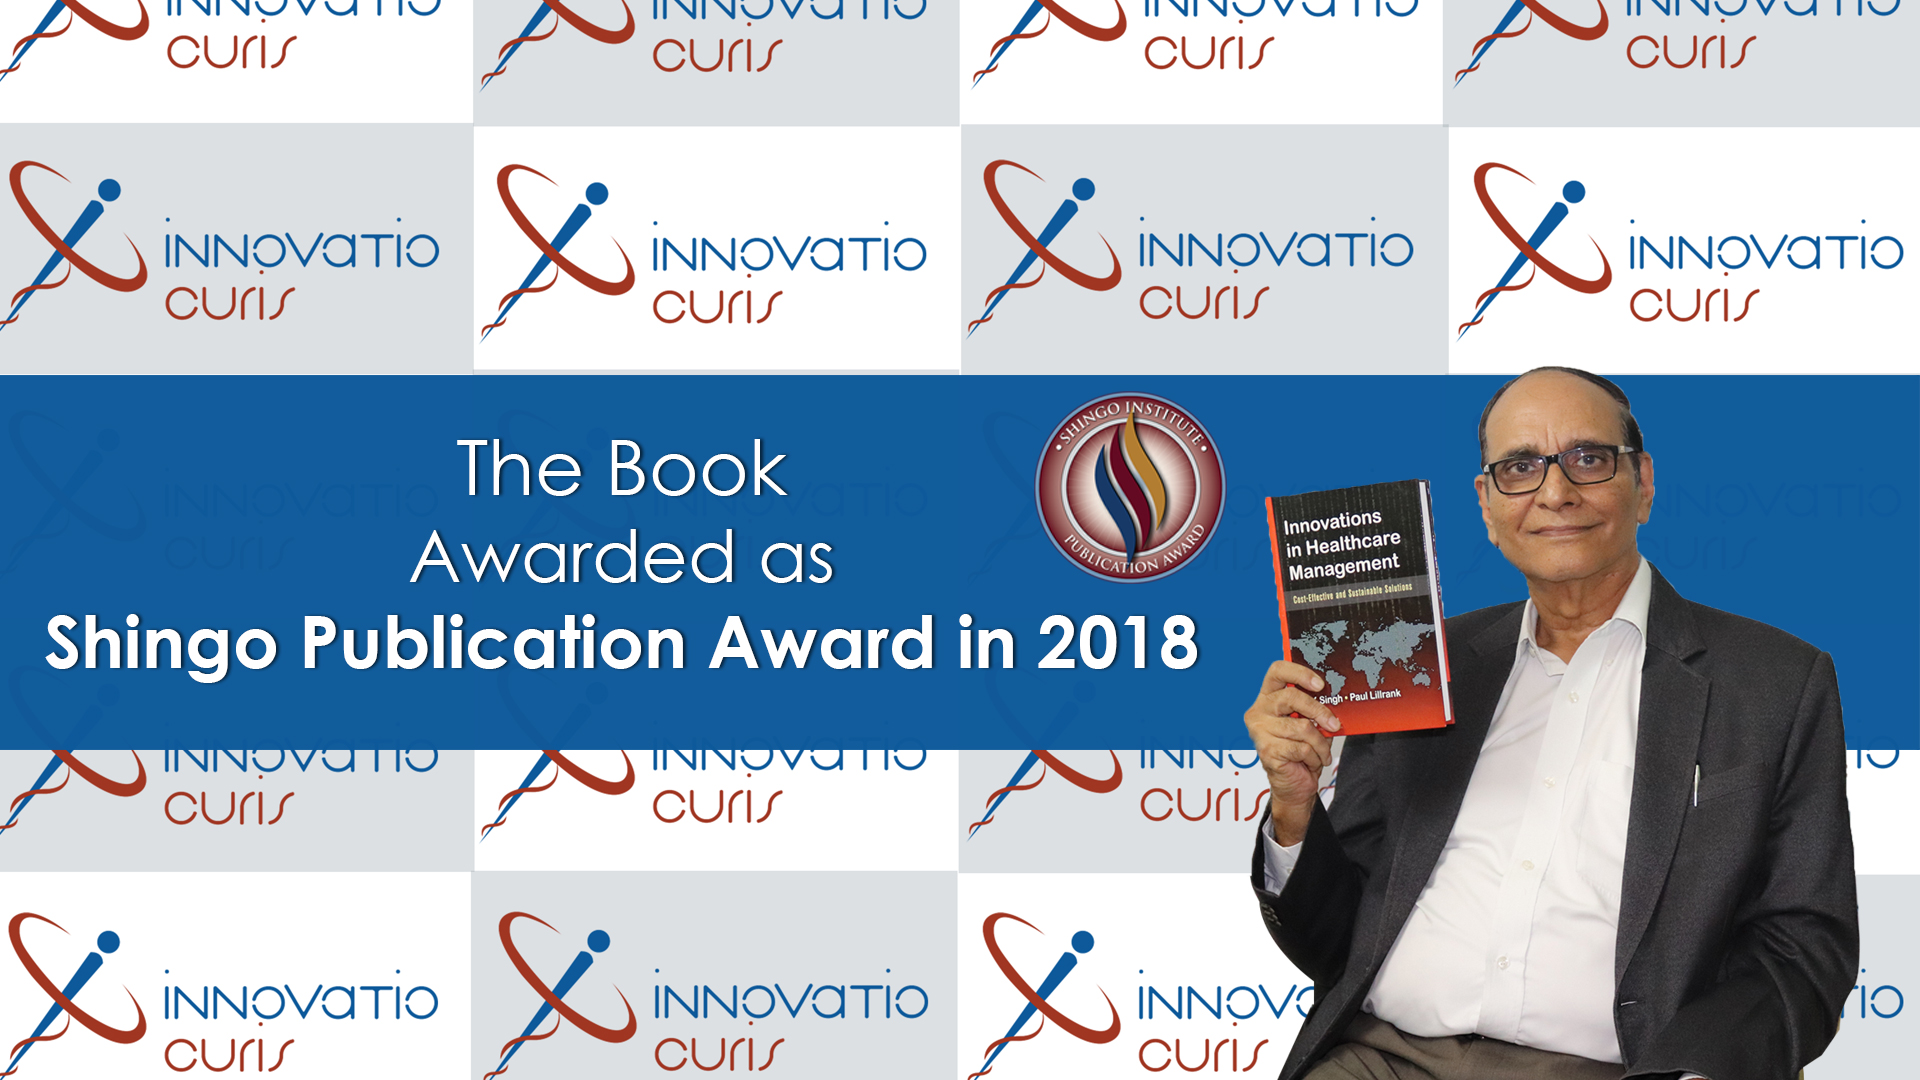 Press Release: The Book Awarded as Shingo Publication Award 2018